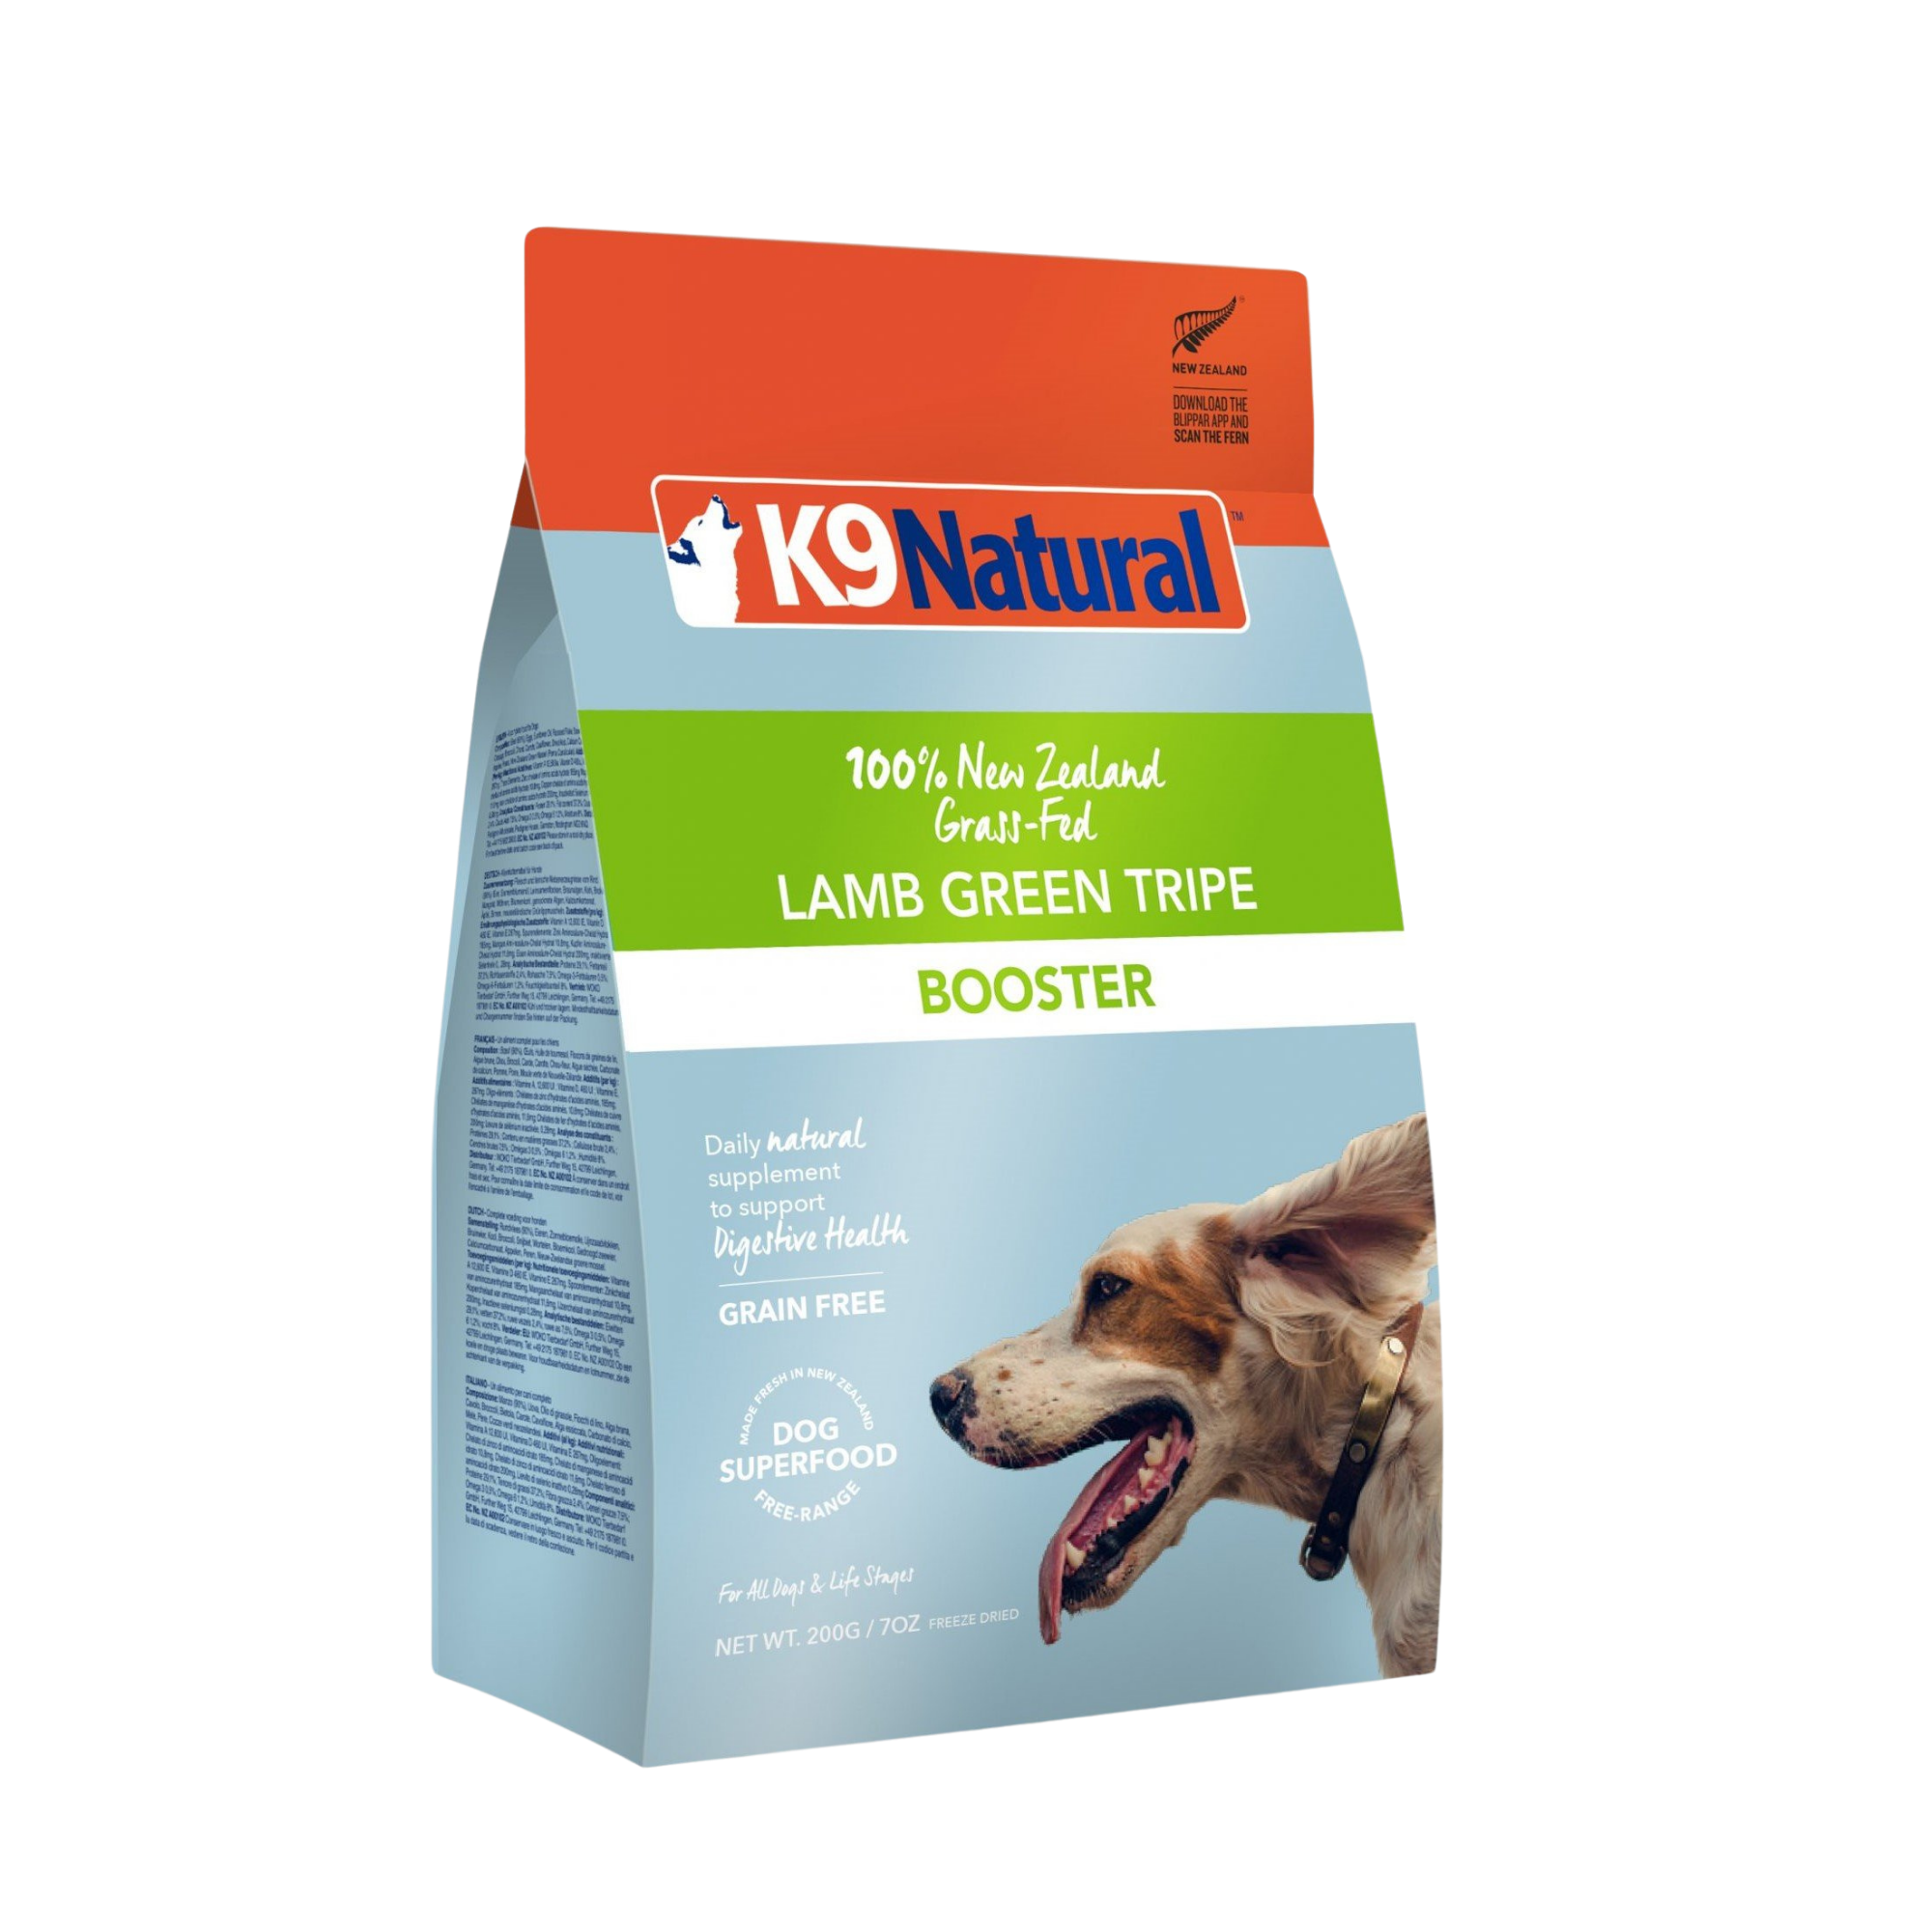 K9 Natural Dog Freeze-Dried Lamb Green Tripe Booster 7 oz